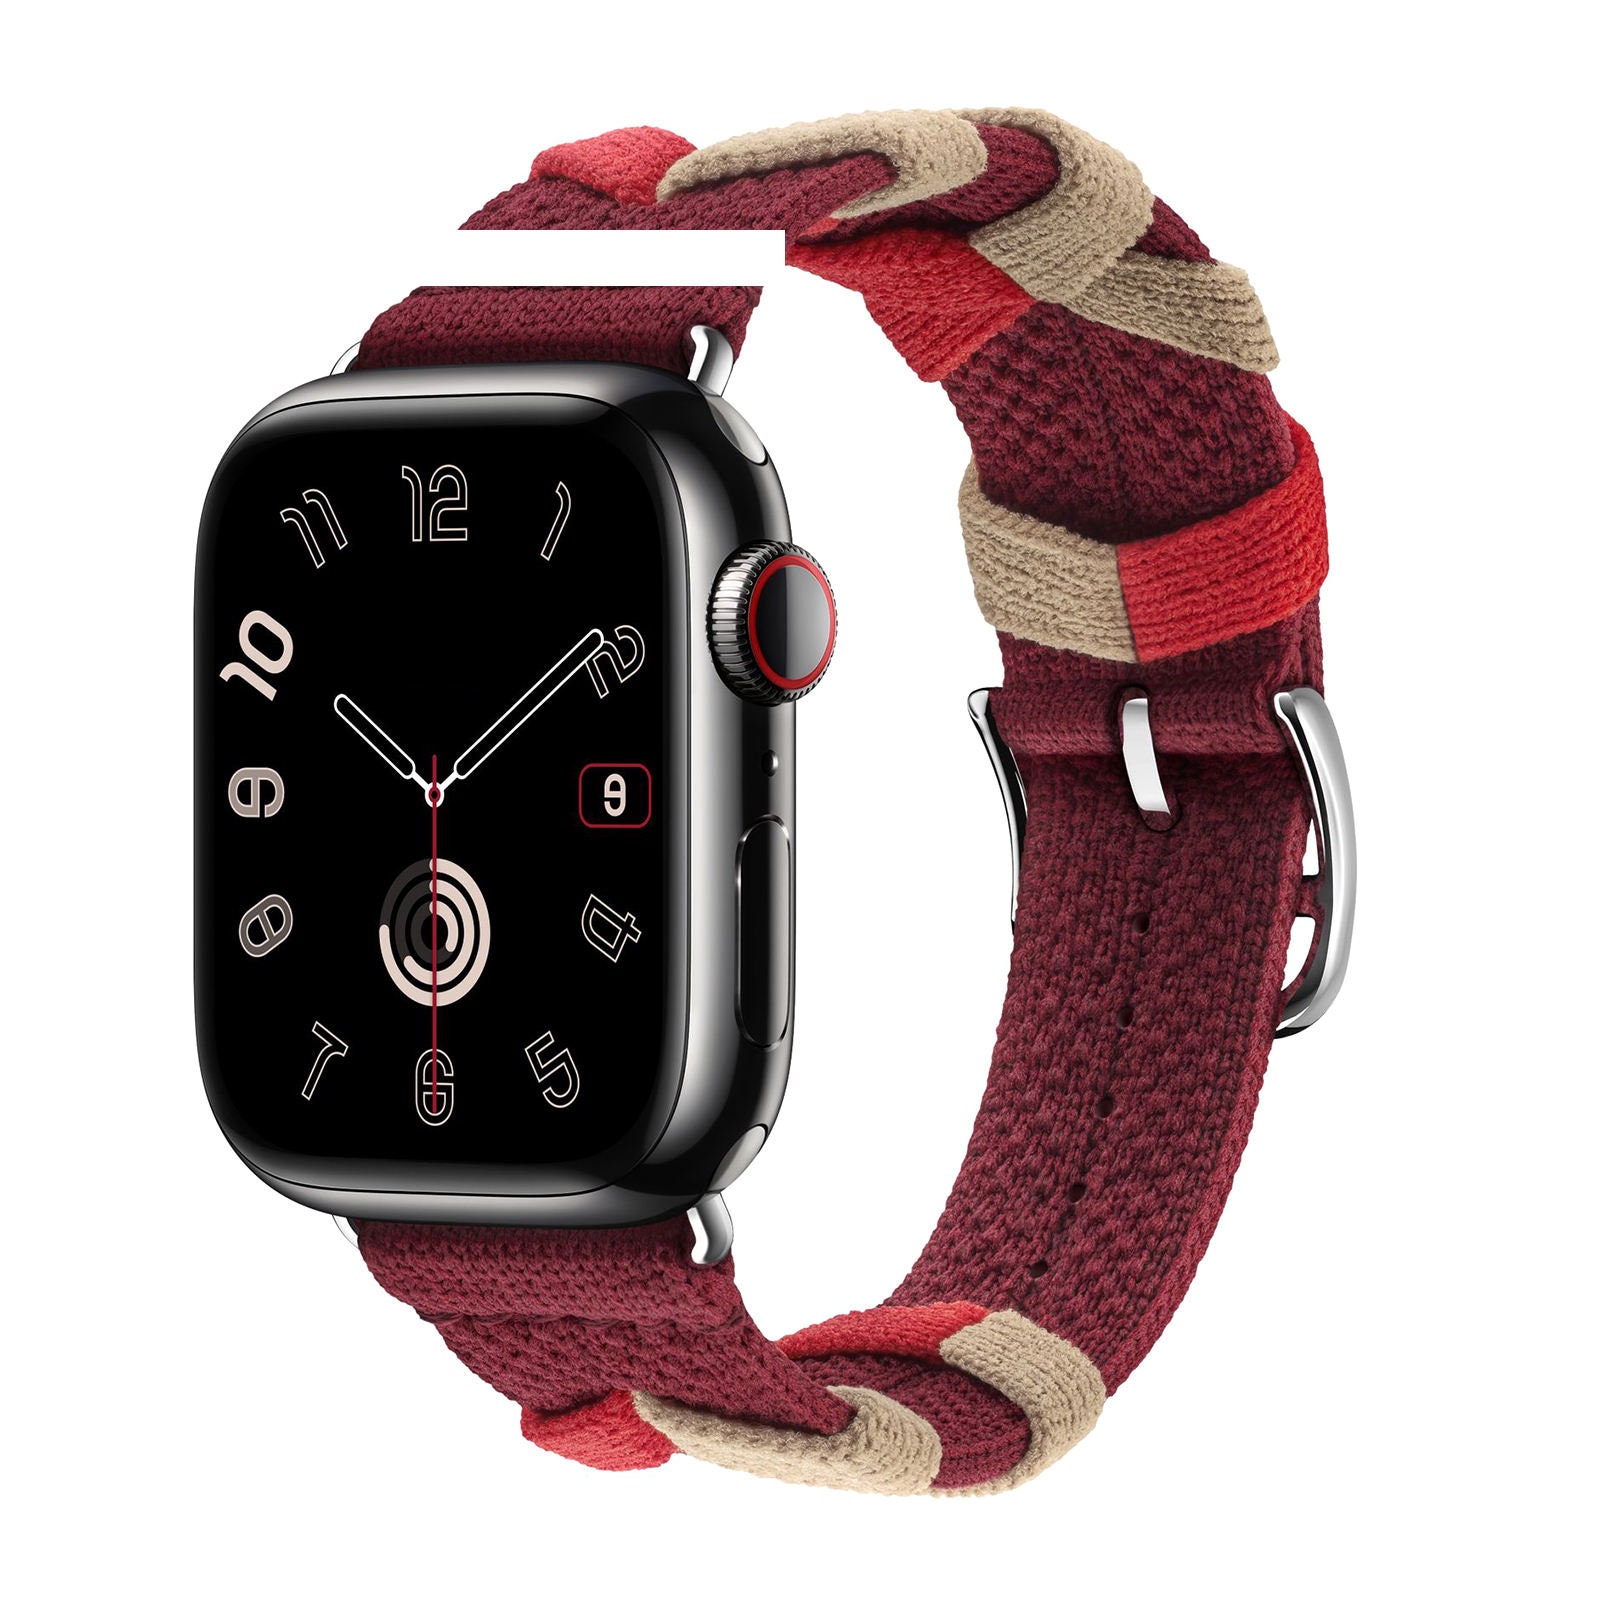 Hermes Apple Watch Band -  Australia